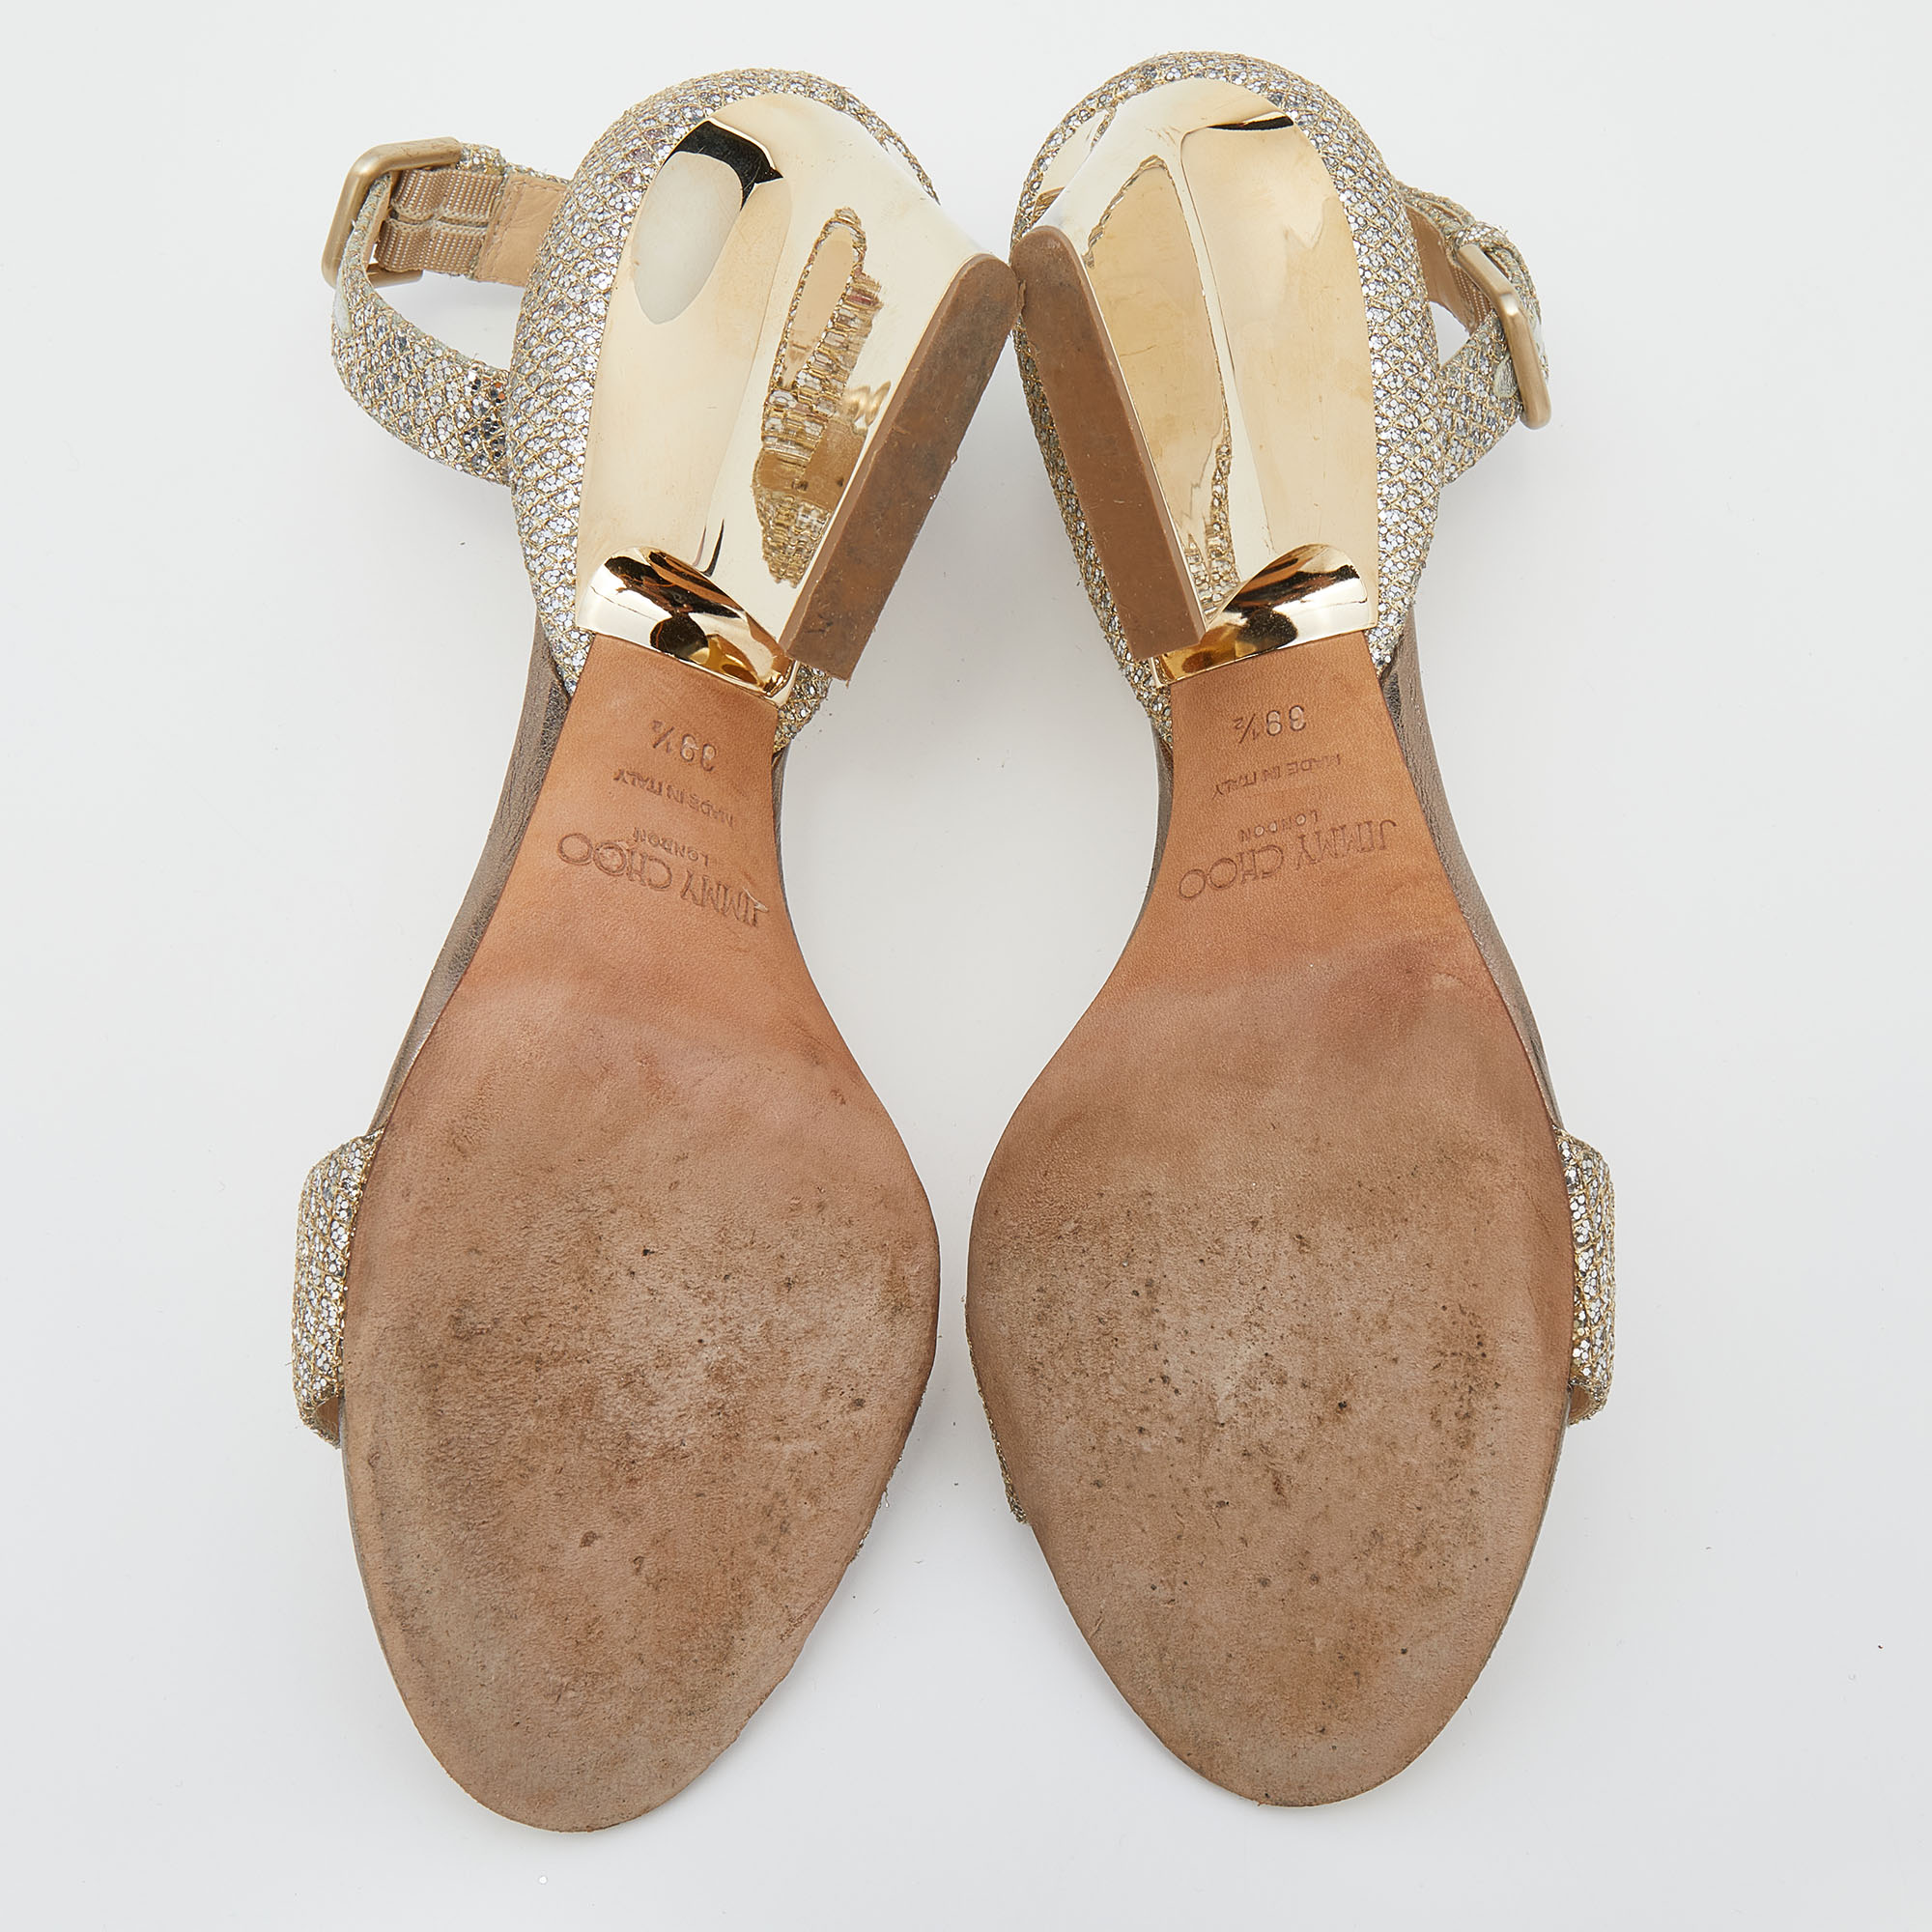 Jimmy Choo Metallic Gold Glitter Ankle Strap Sandals Size 39.5